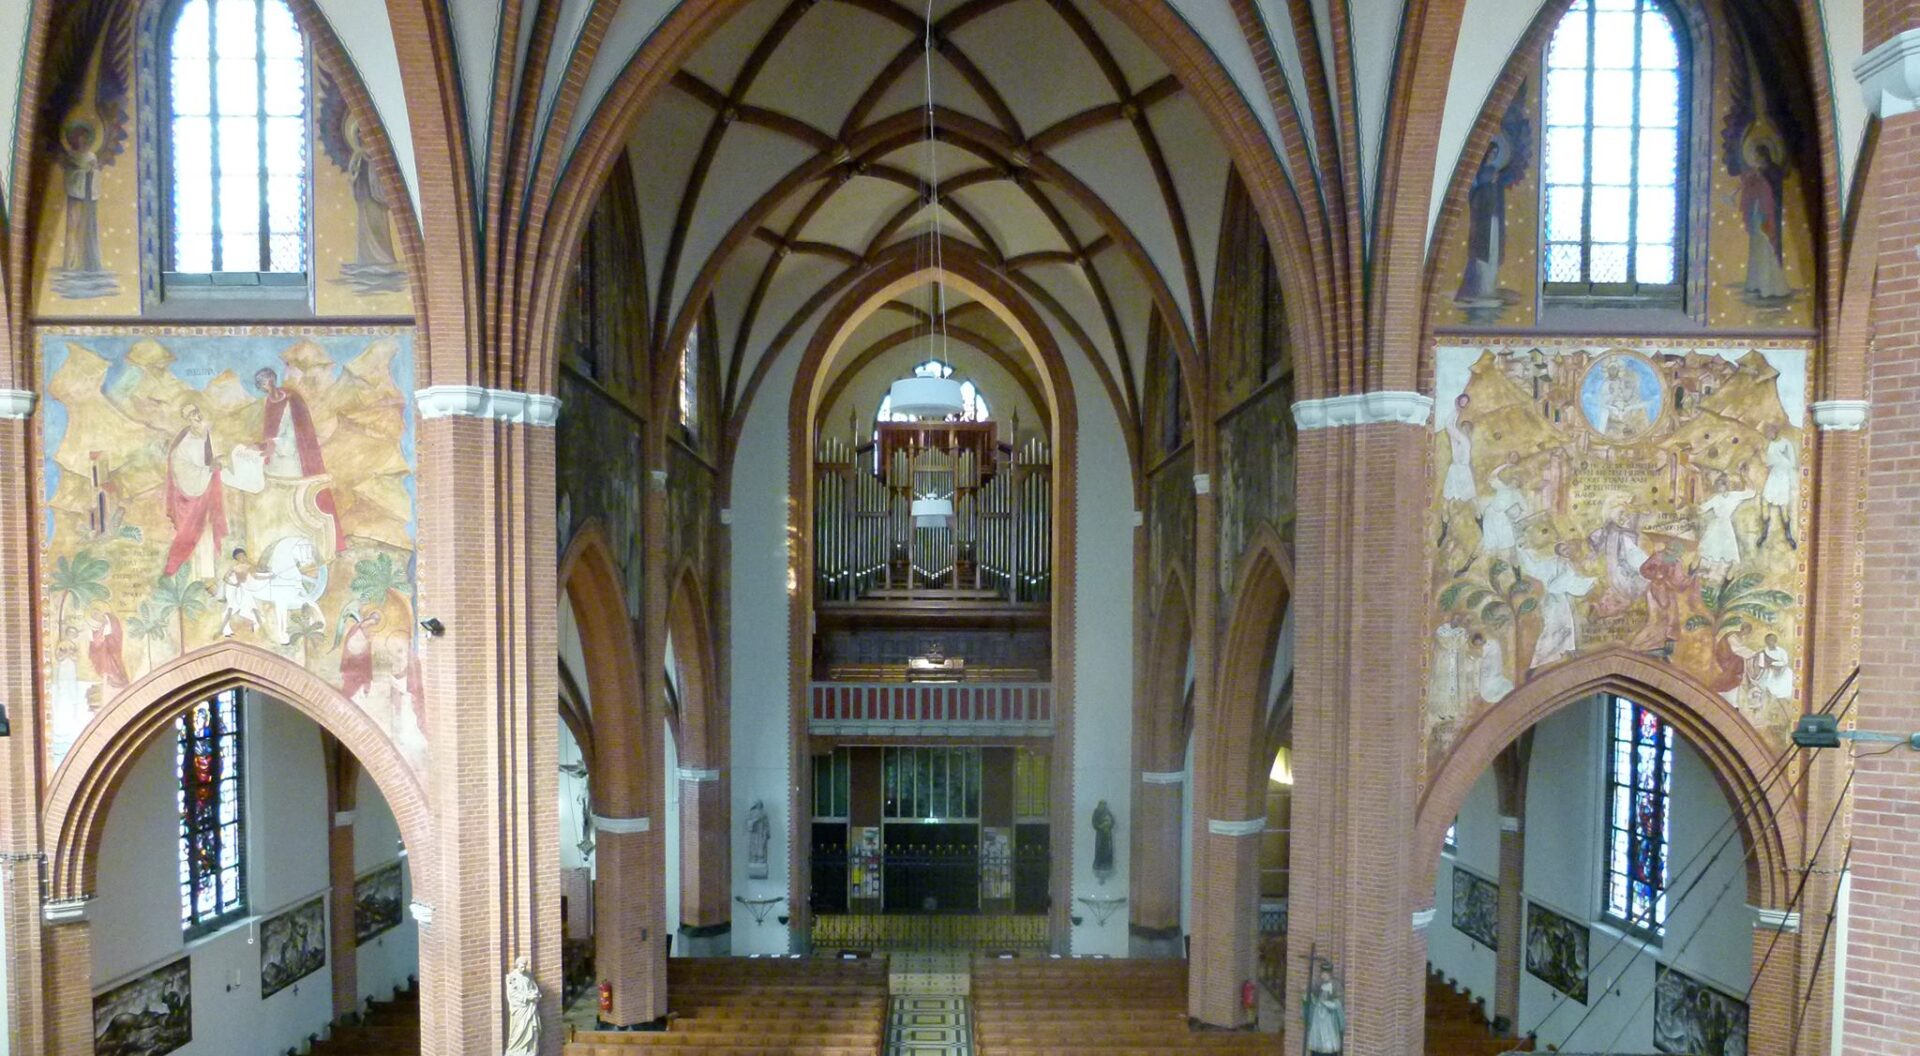 Orgelconcert Erik Jan Eradus in H. Calixtusbasiliek in Groenlo